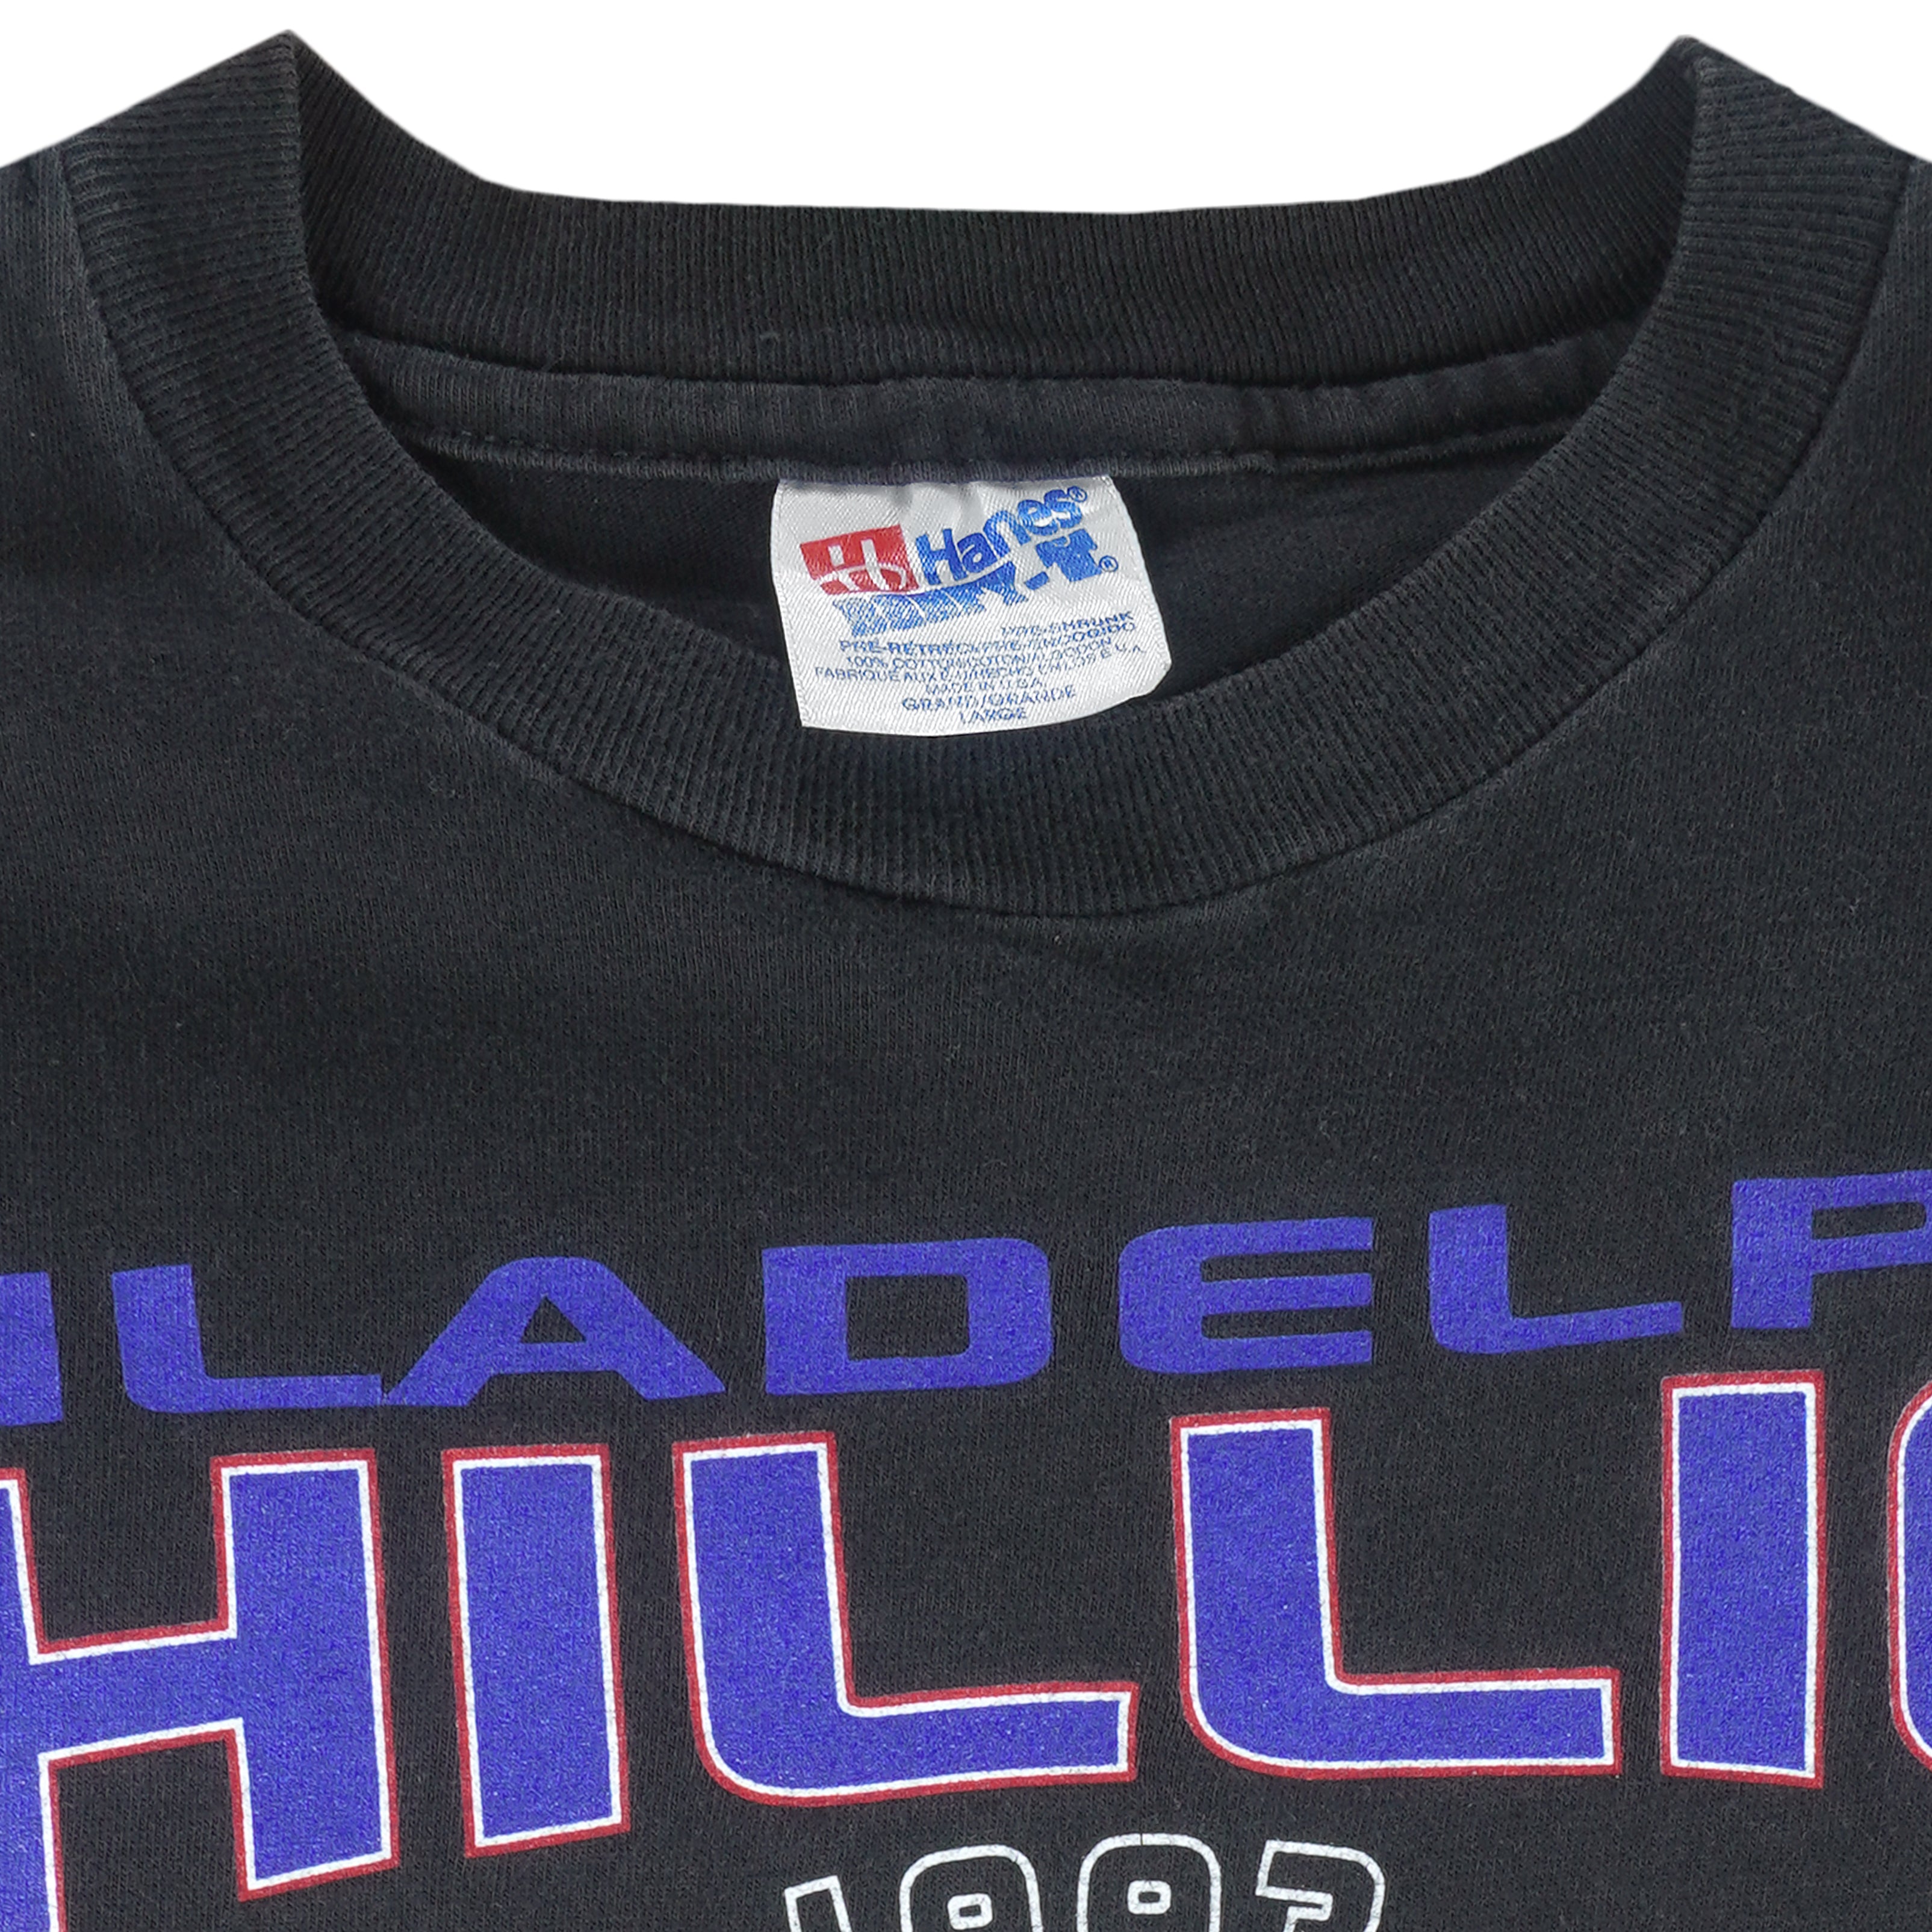 90s Philadelphia Phillies 1993 NL Champions t-shirt Large - The